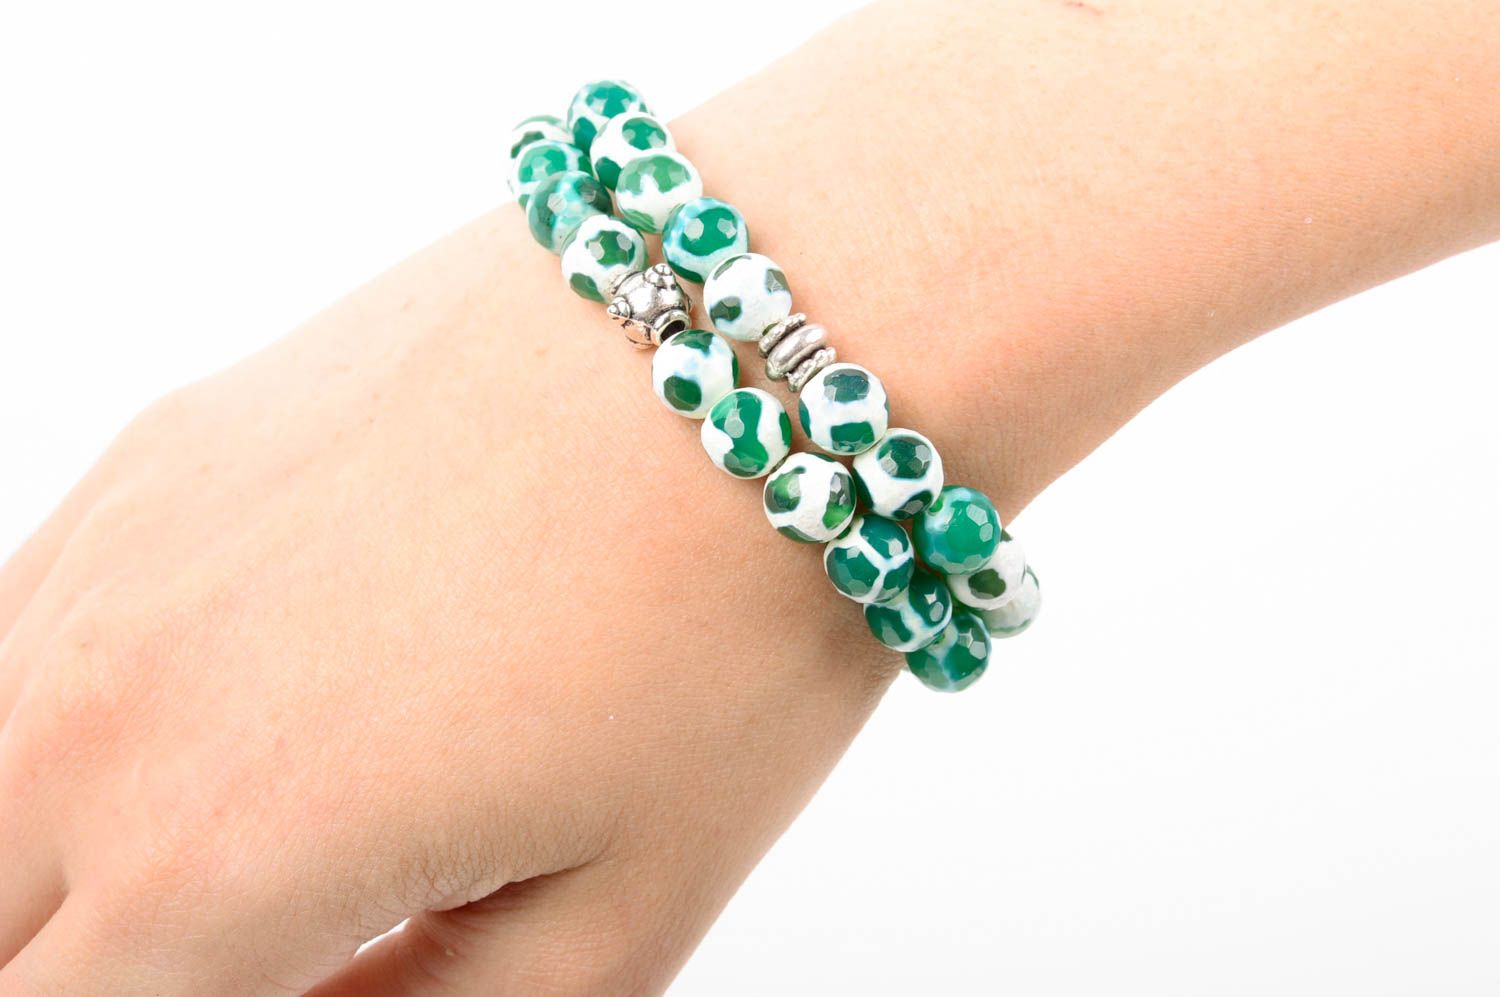 Handmade bracelet made of natural stones unusual stylish bracelets wrist jewelry photo 2